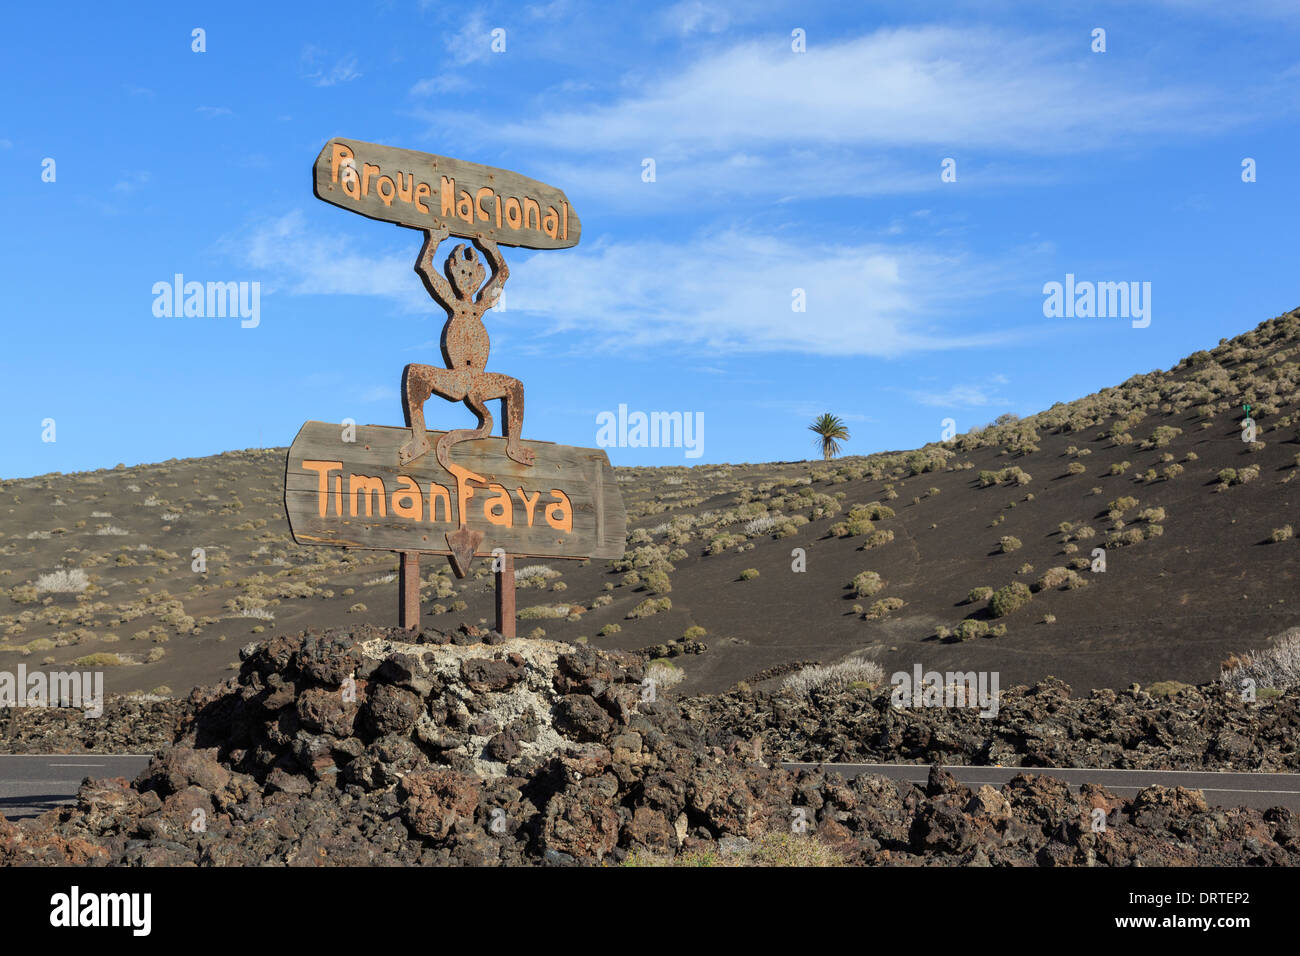 Timanfaya National Park sign for Fire Mountains of Parque Nacional de Timanfaya, Lanzarote, Canary Islands, Spain Stock Photo